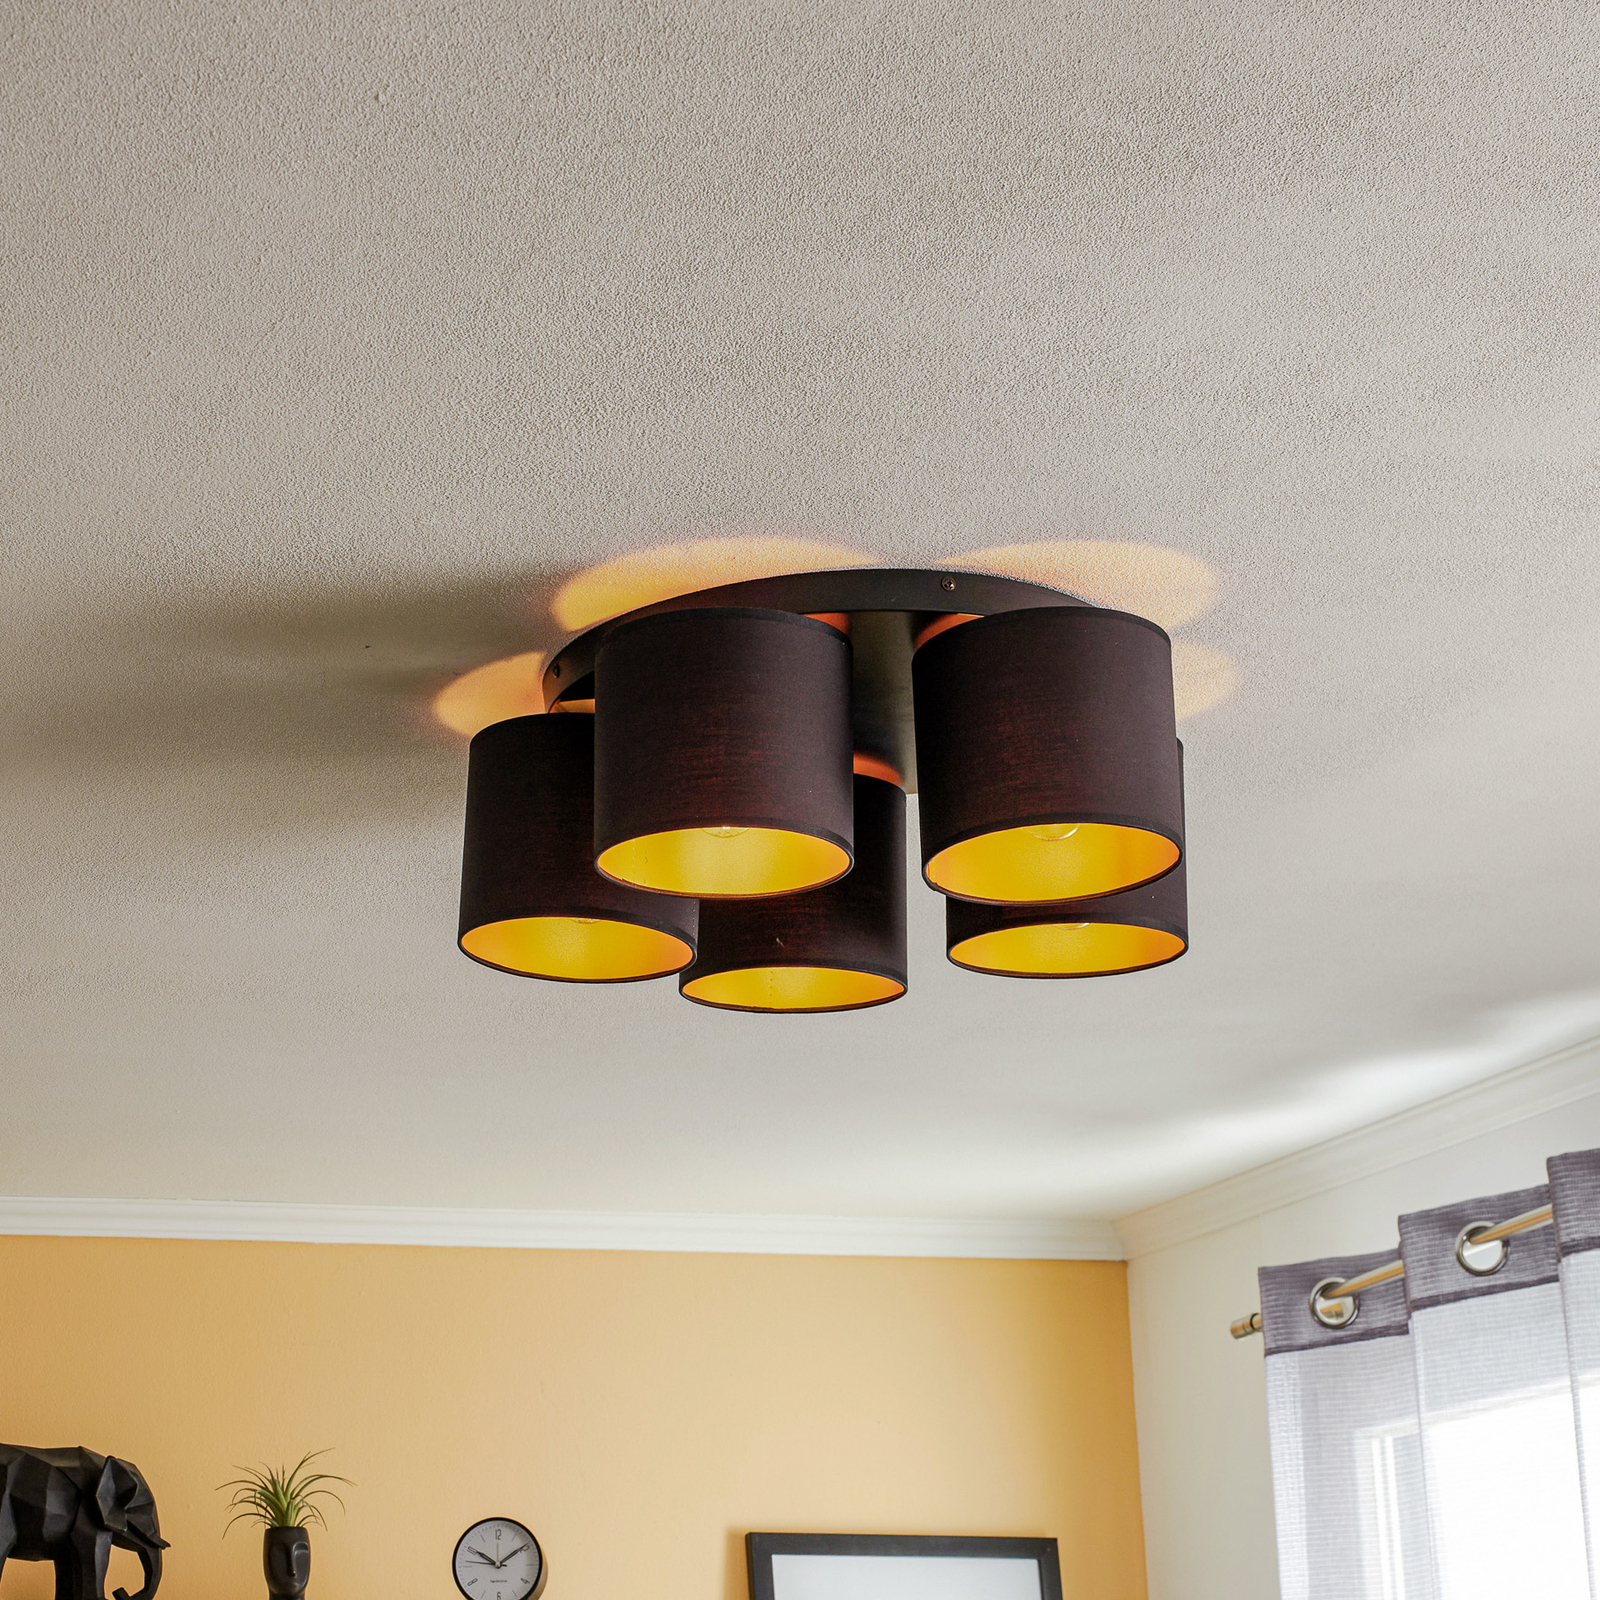 Jovin ceiling light, five lampshades black/gold